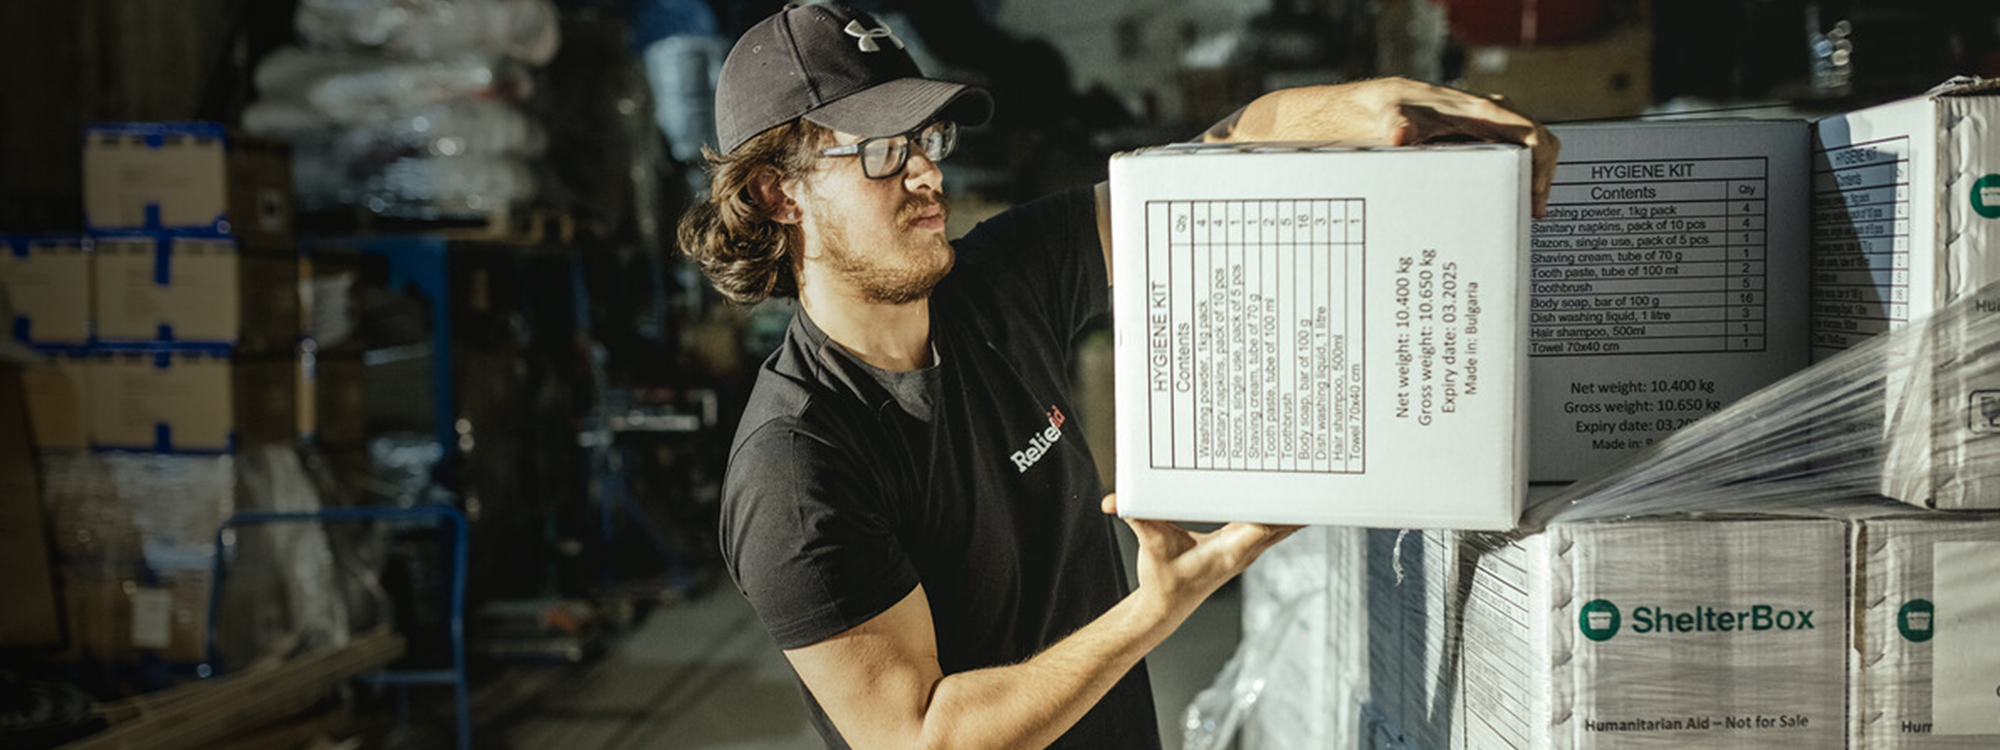 Man unloading boxes at a warehouse.